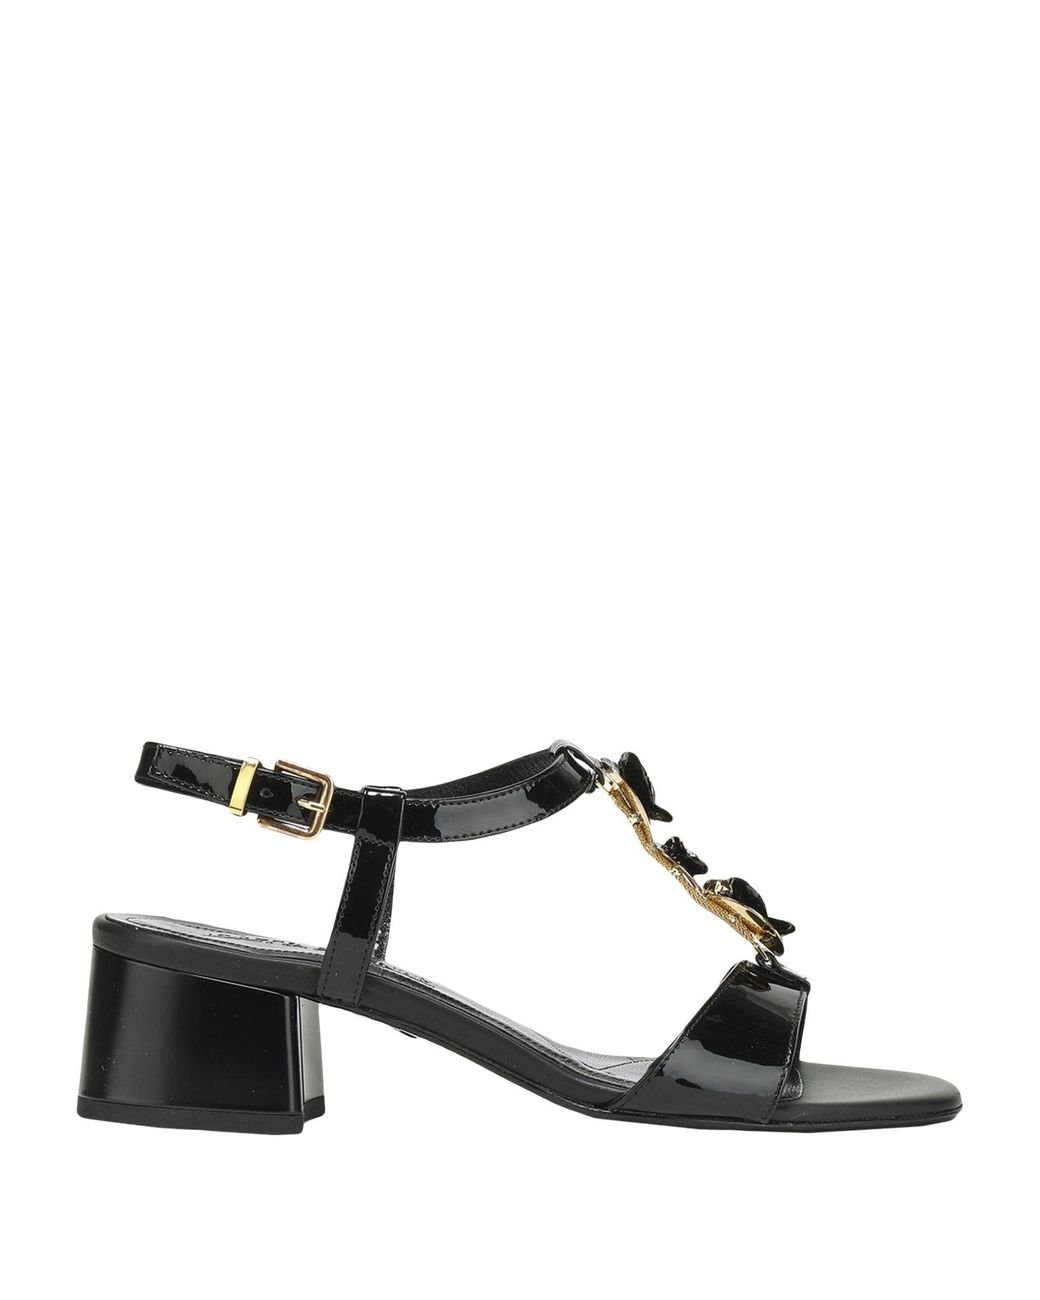 Loretta Pettinari Leather Sandals in Black - Lyst